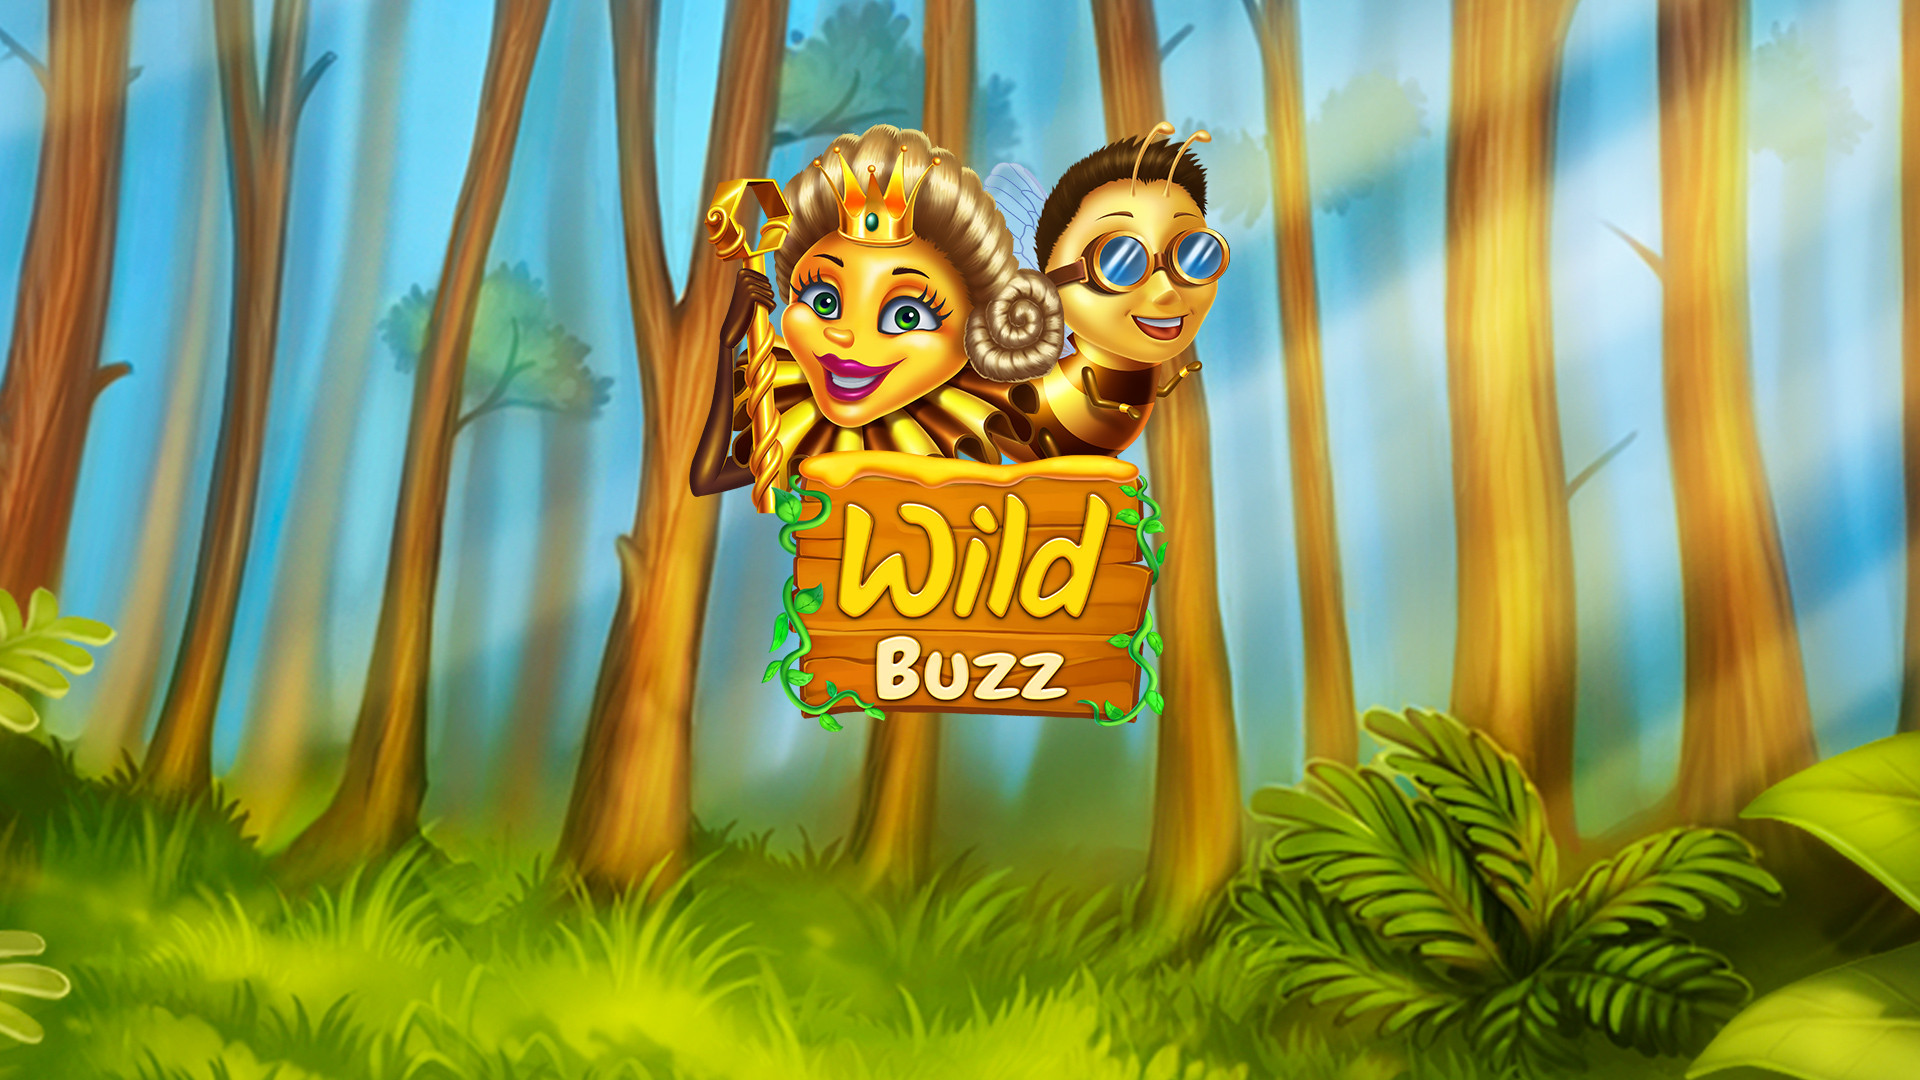 Wild Buzz